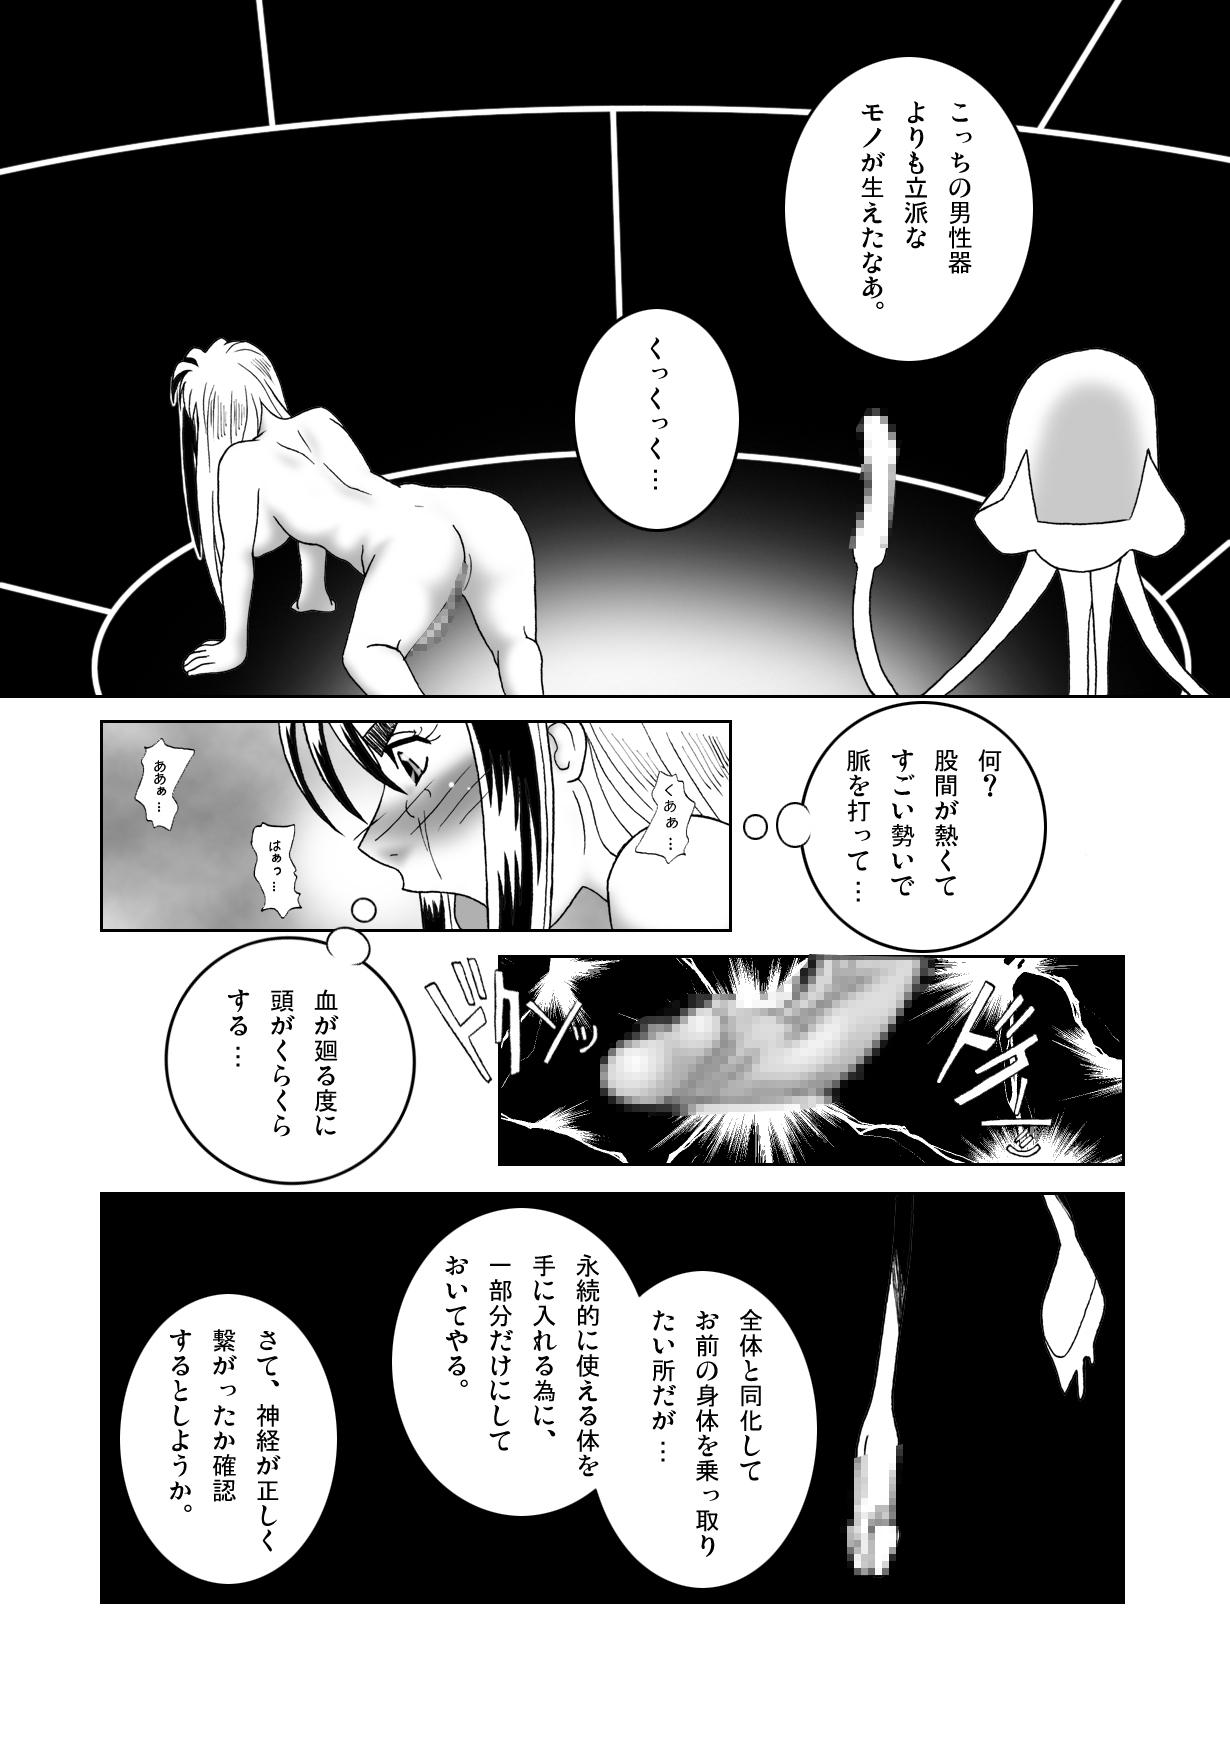 Panocha Tetsuwan Seed Dai 2 Wa Shokubai - Birdy the mighty Large - Page 7